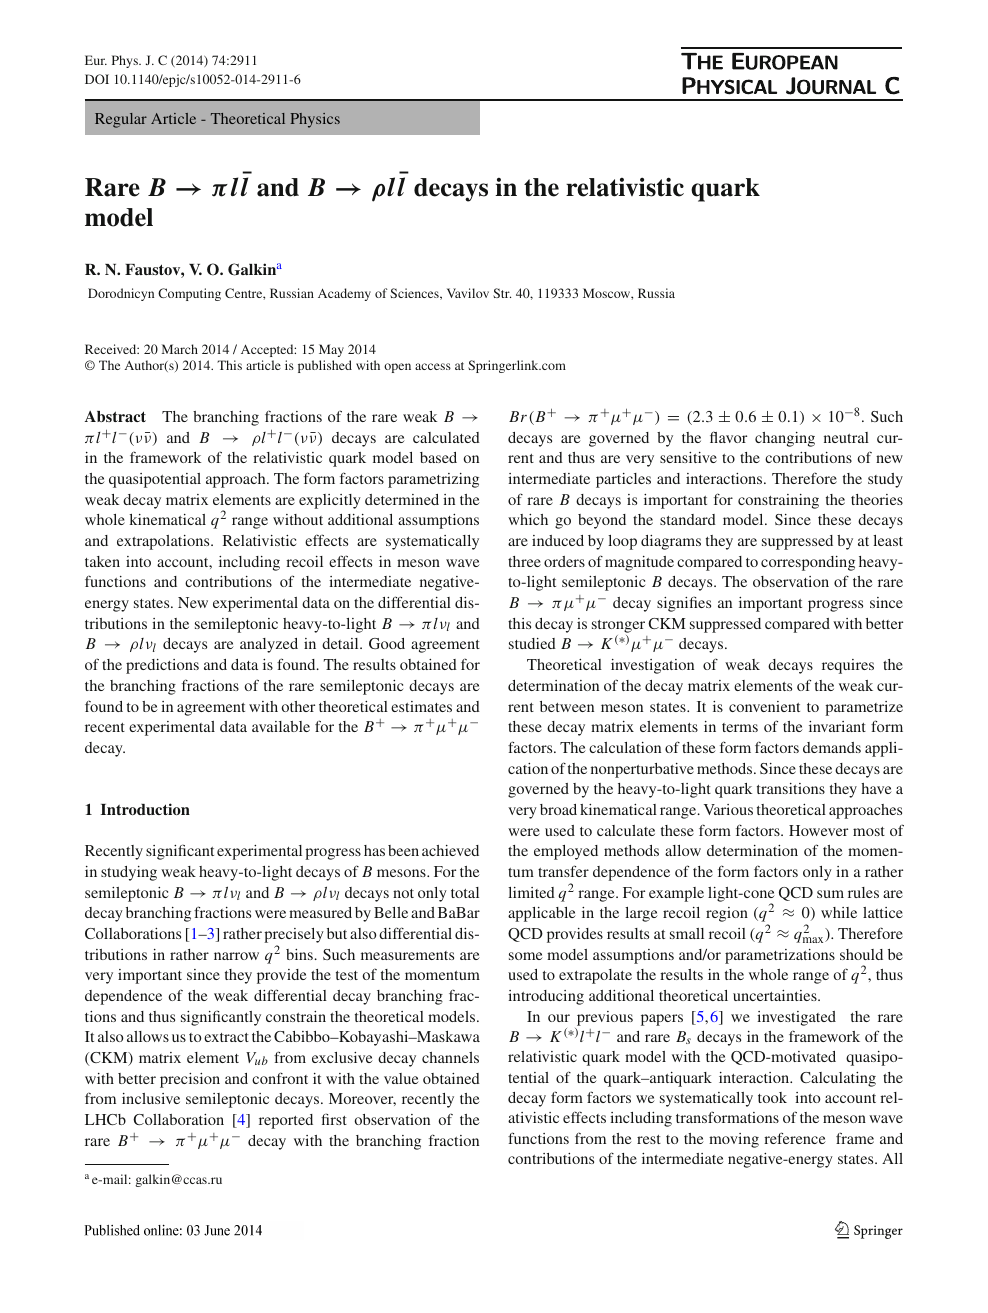 Rare B Rightarrow Pi L Bar L B P L L And B Rightarrow Rho L Bar L B R L L Decays In The Relativistic Quark Model Topic Of Research Paper